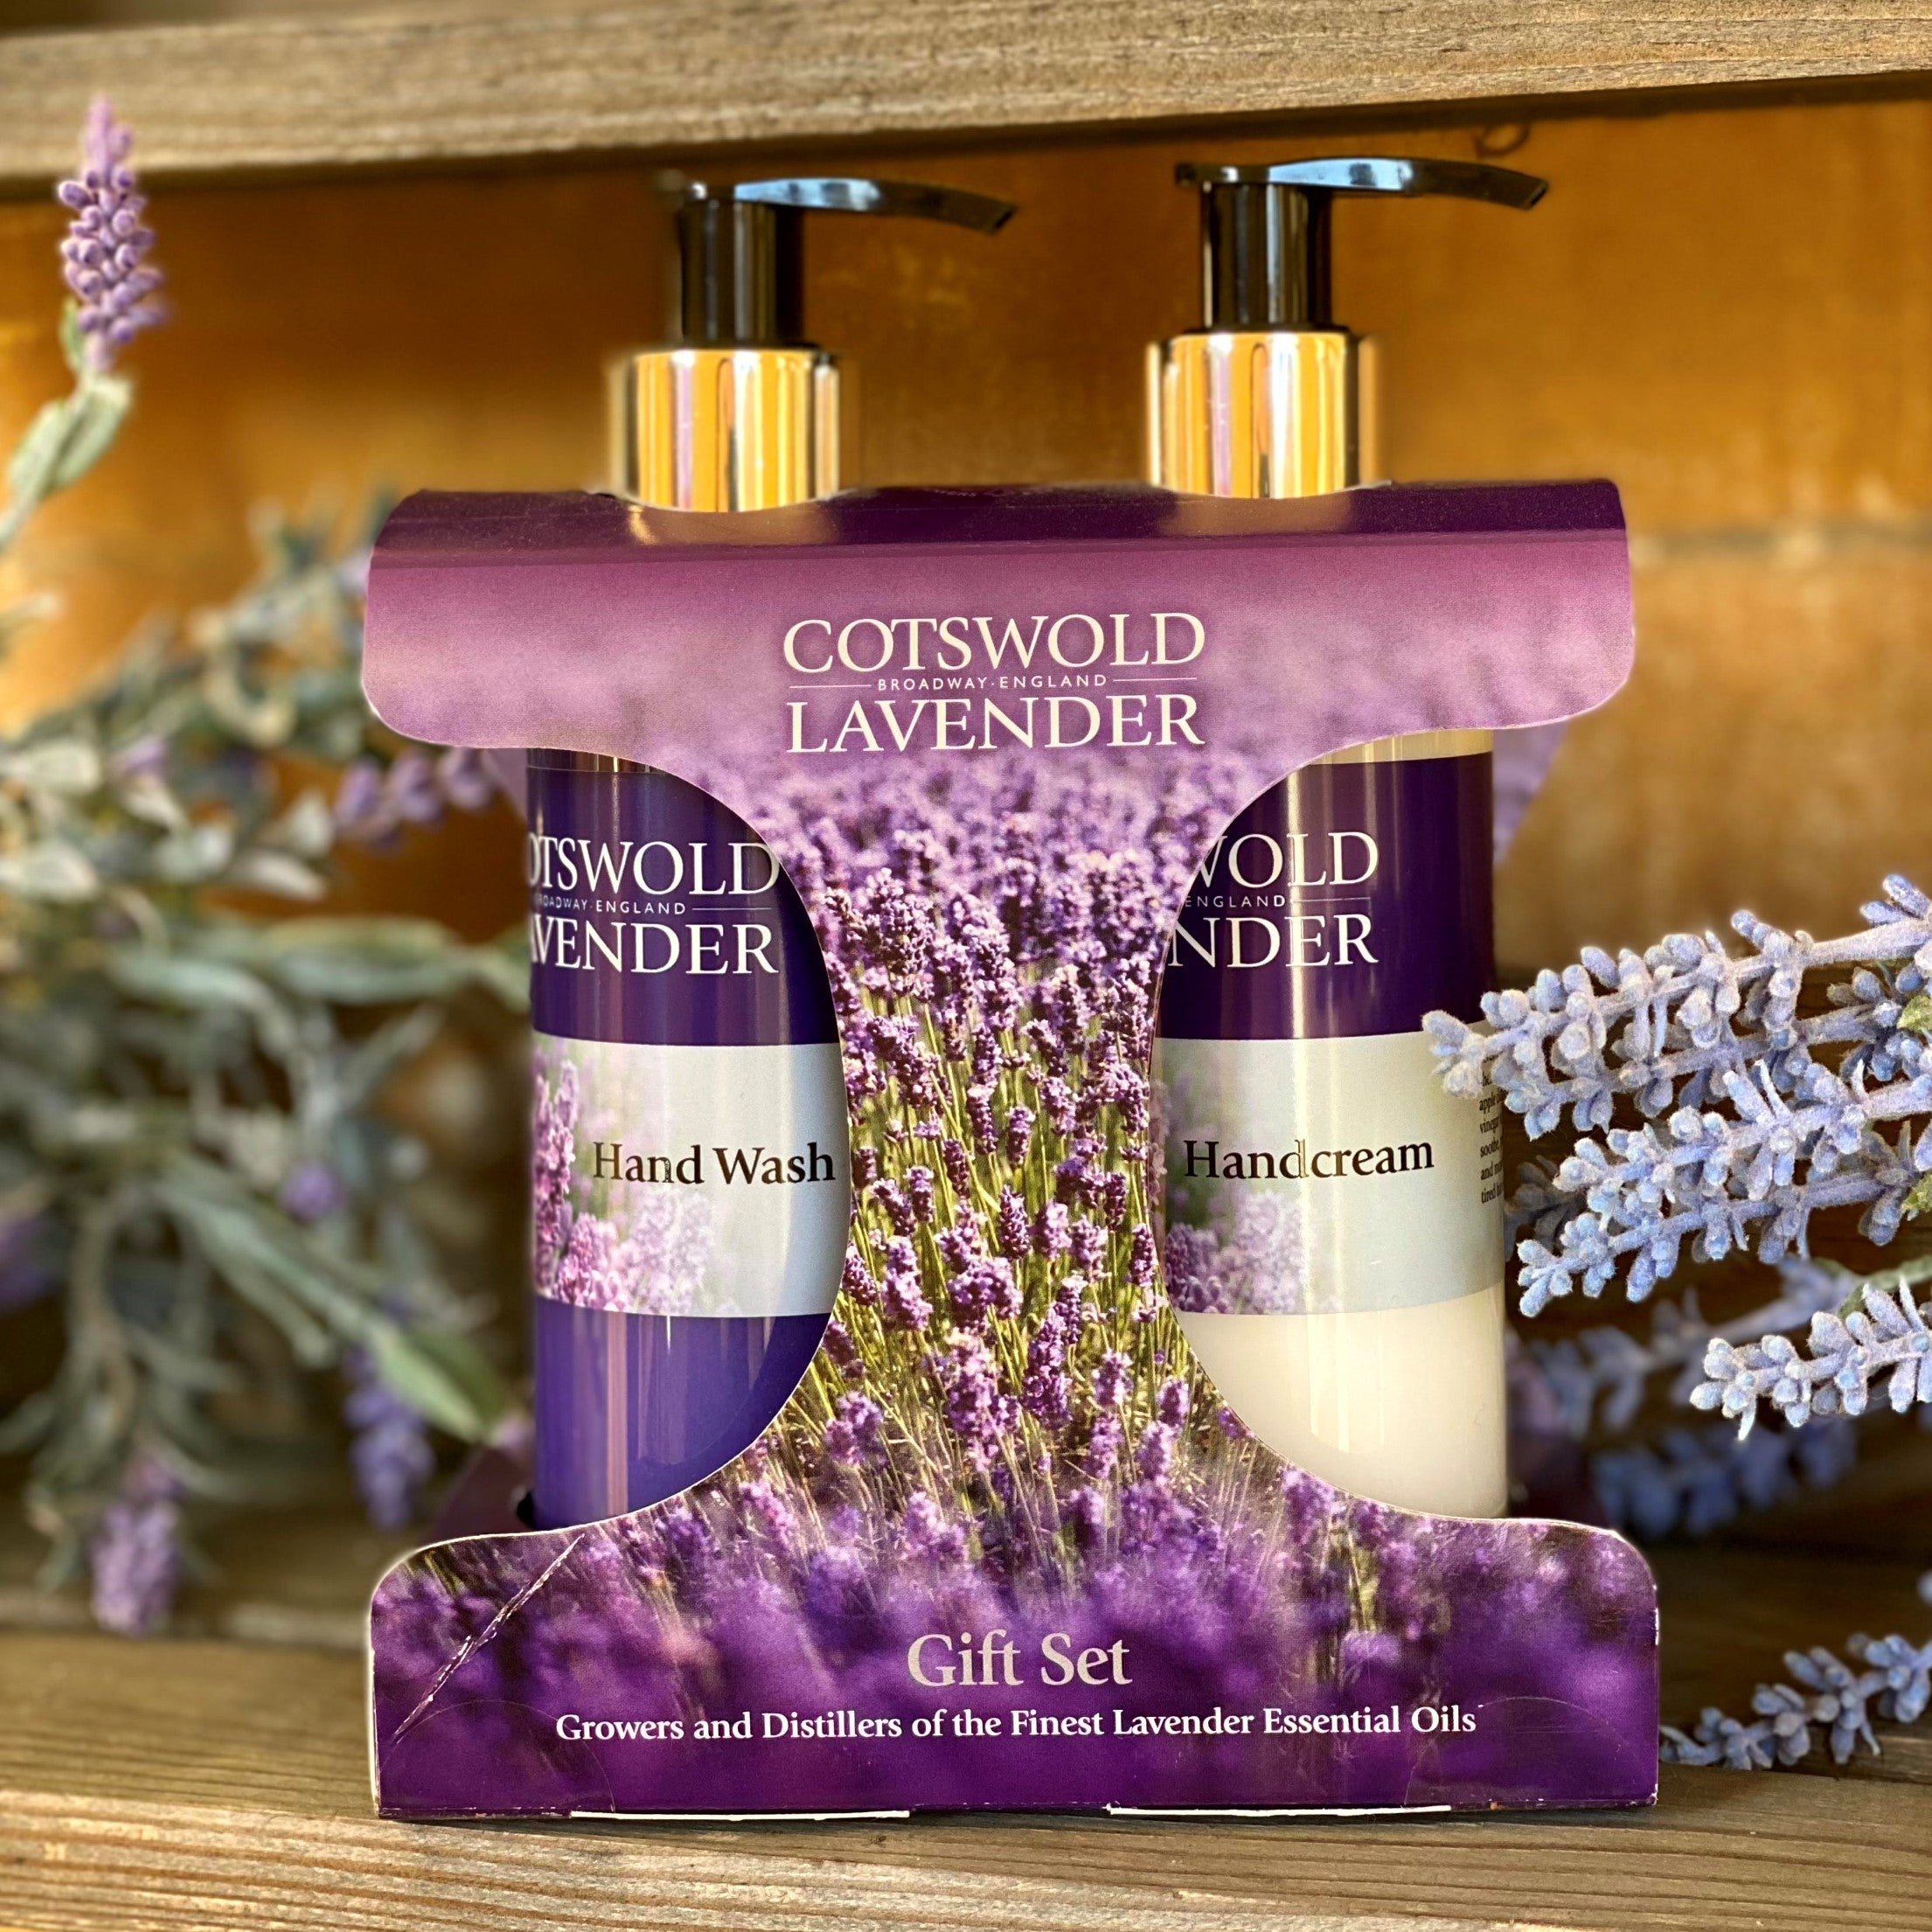 Cotswold Lavender Hand Care Gift Set